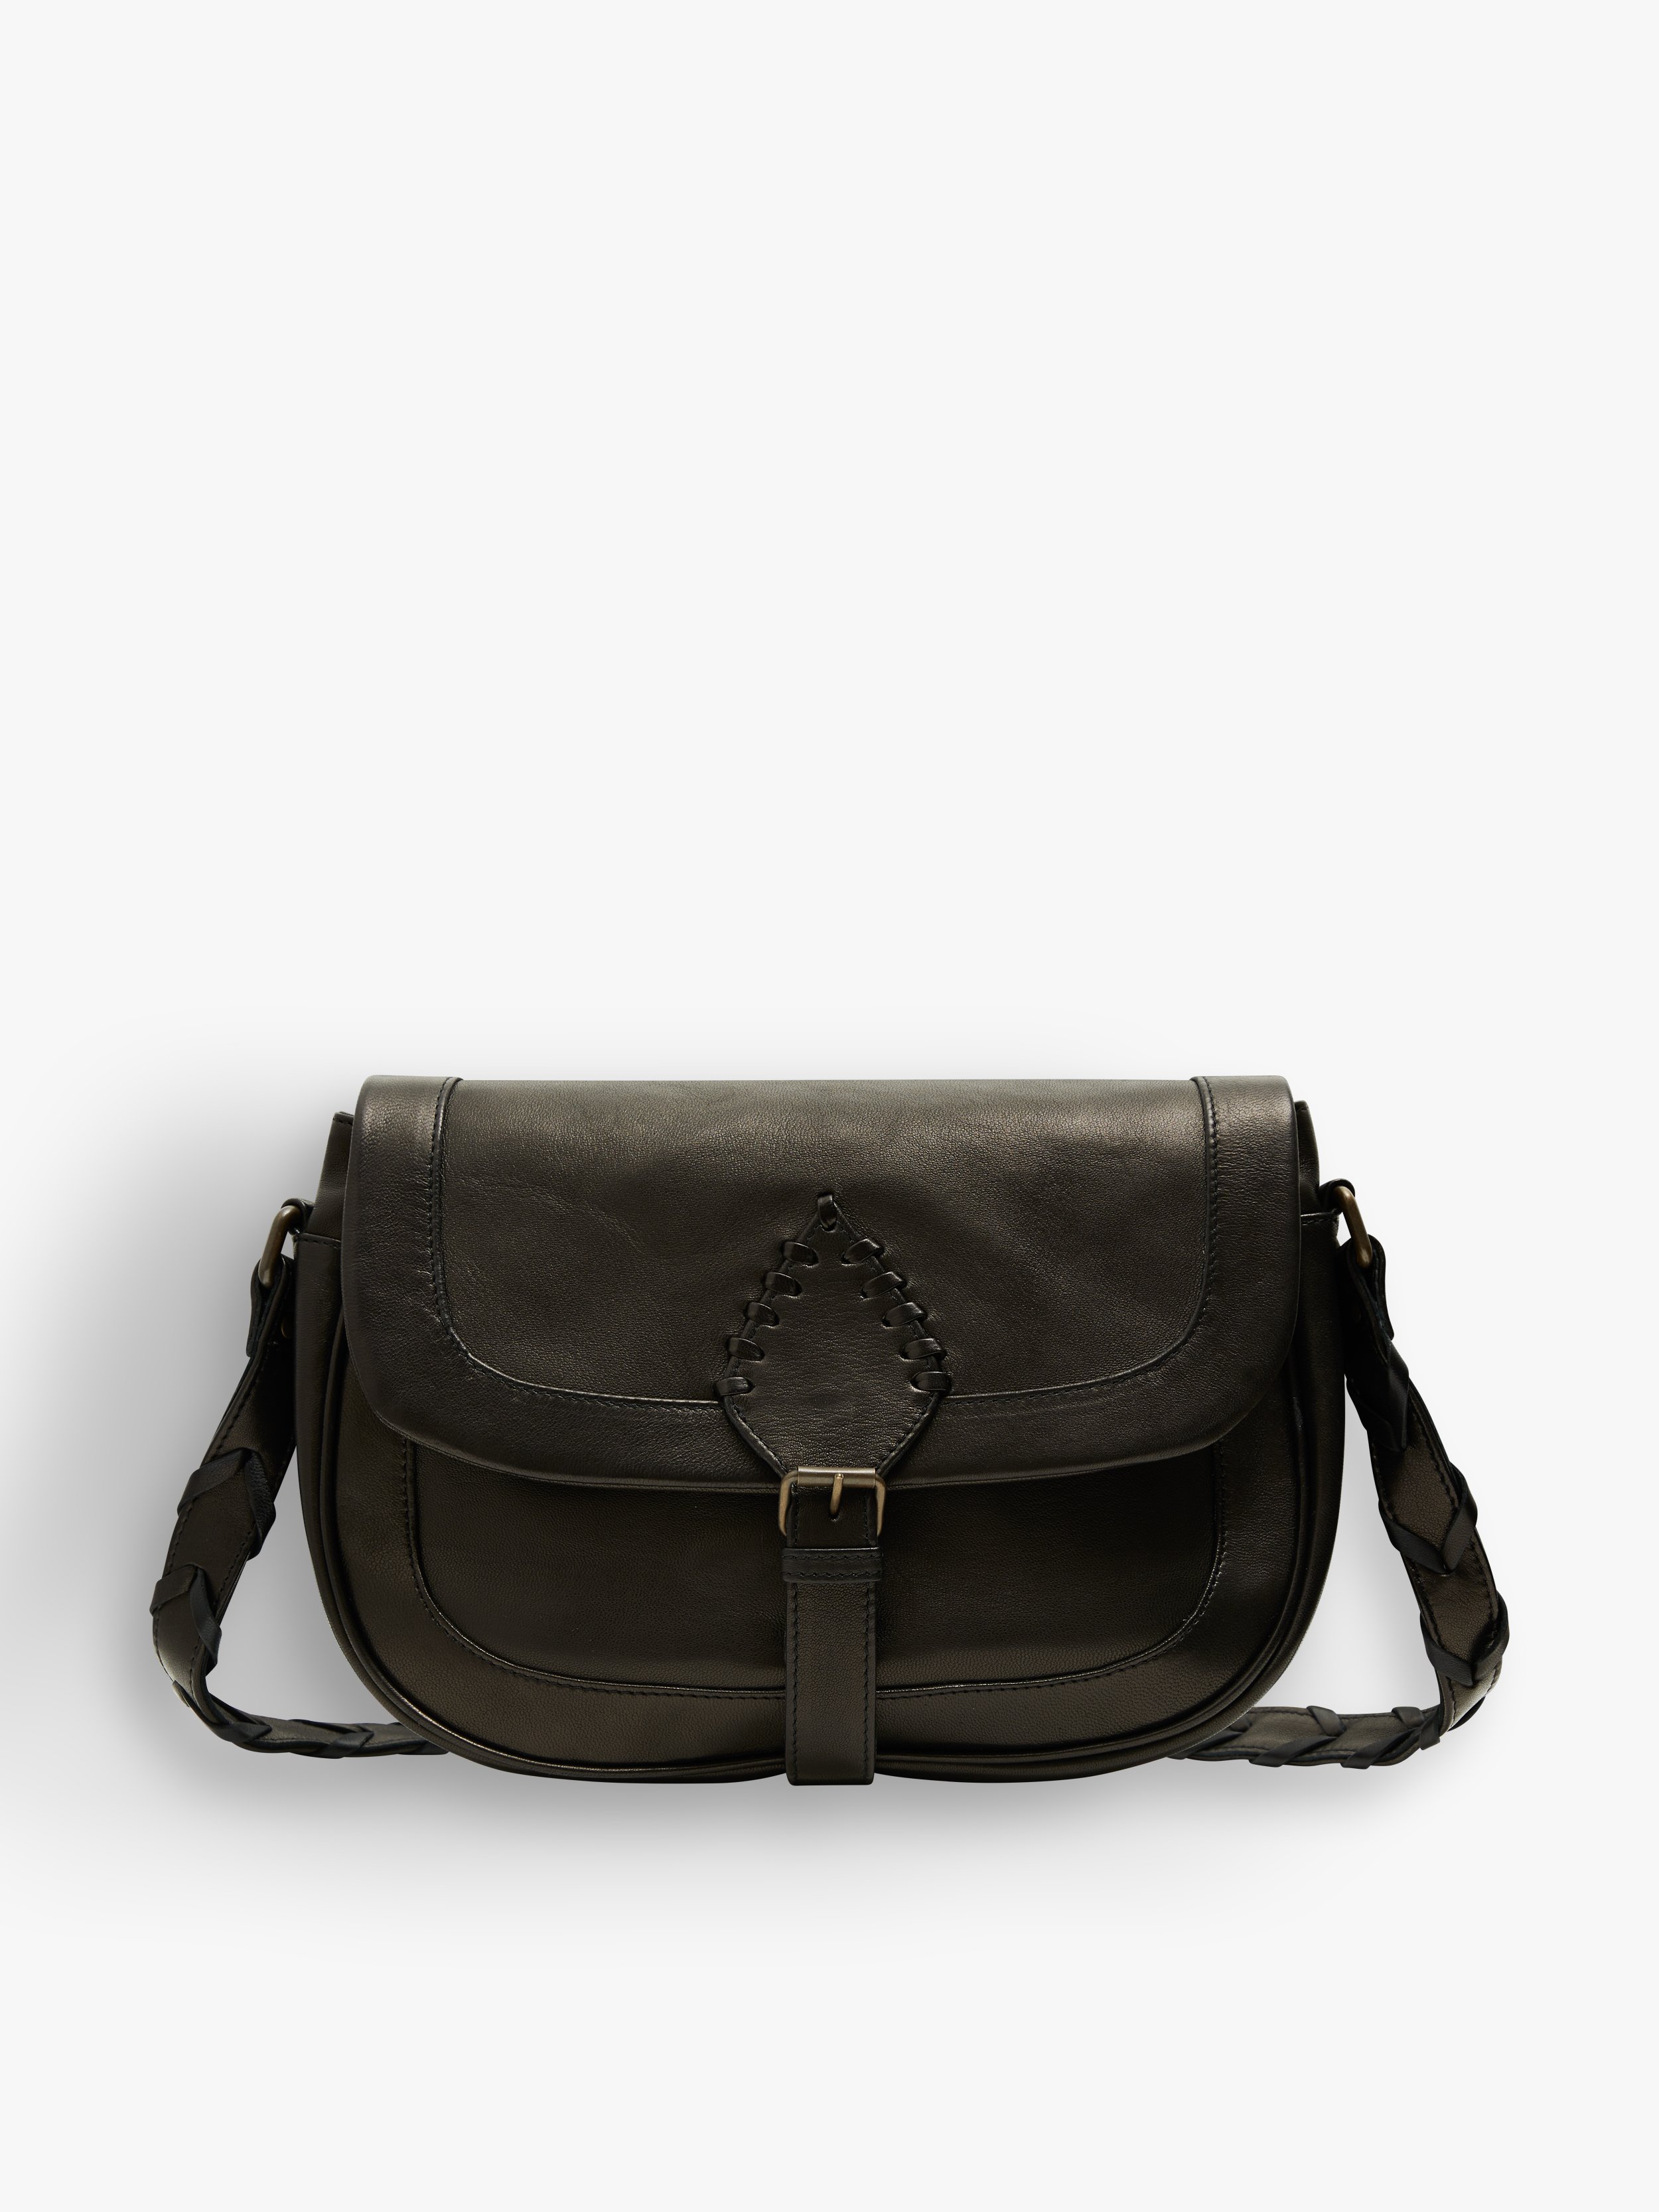 black leather Marnie bis shoulder bag | agnès b.